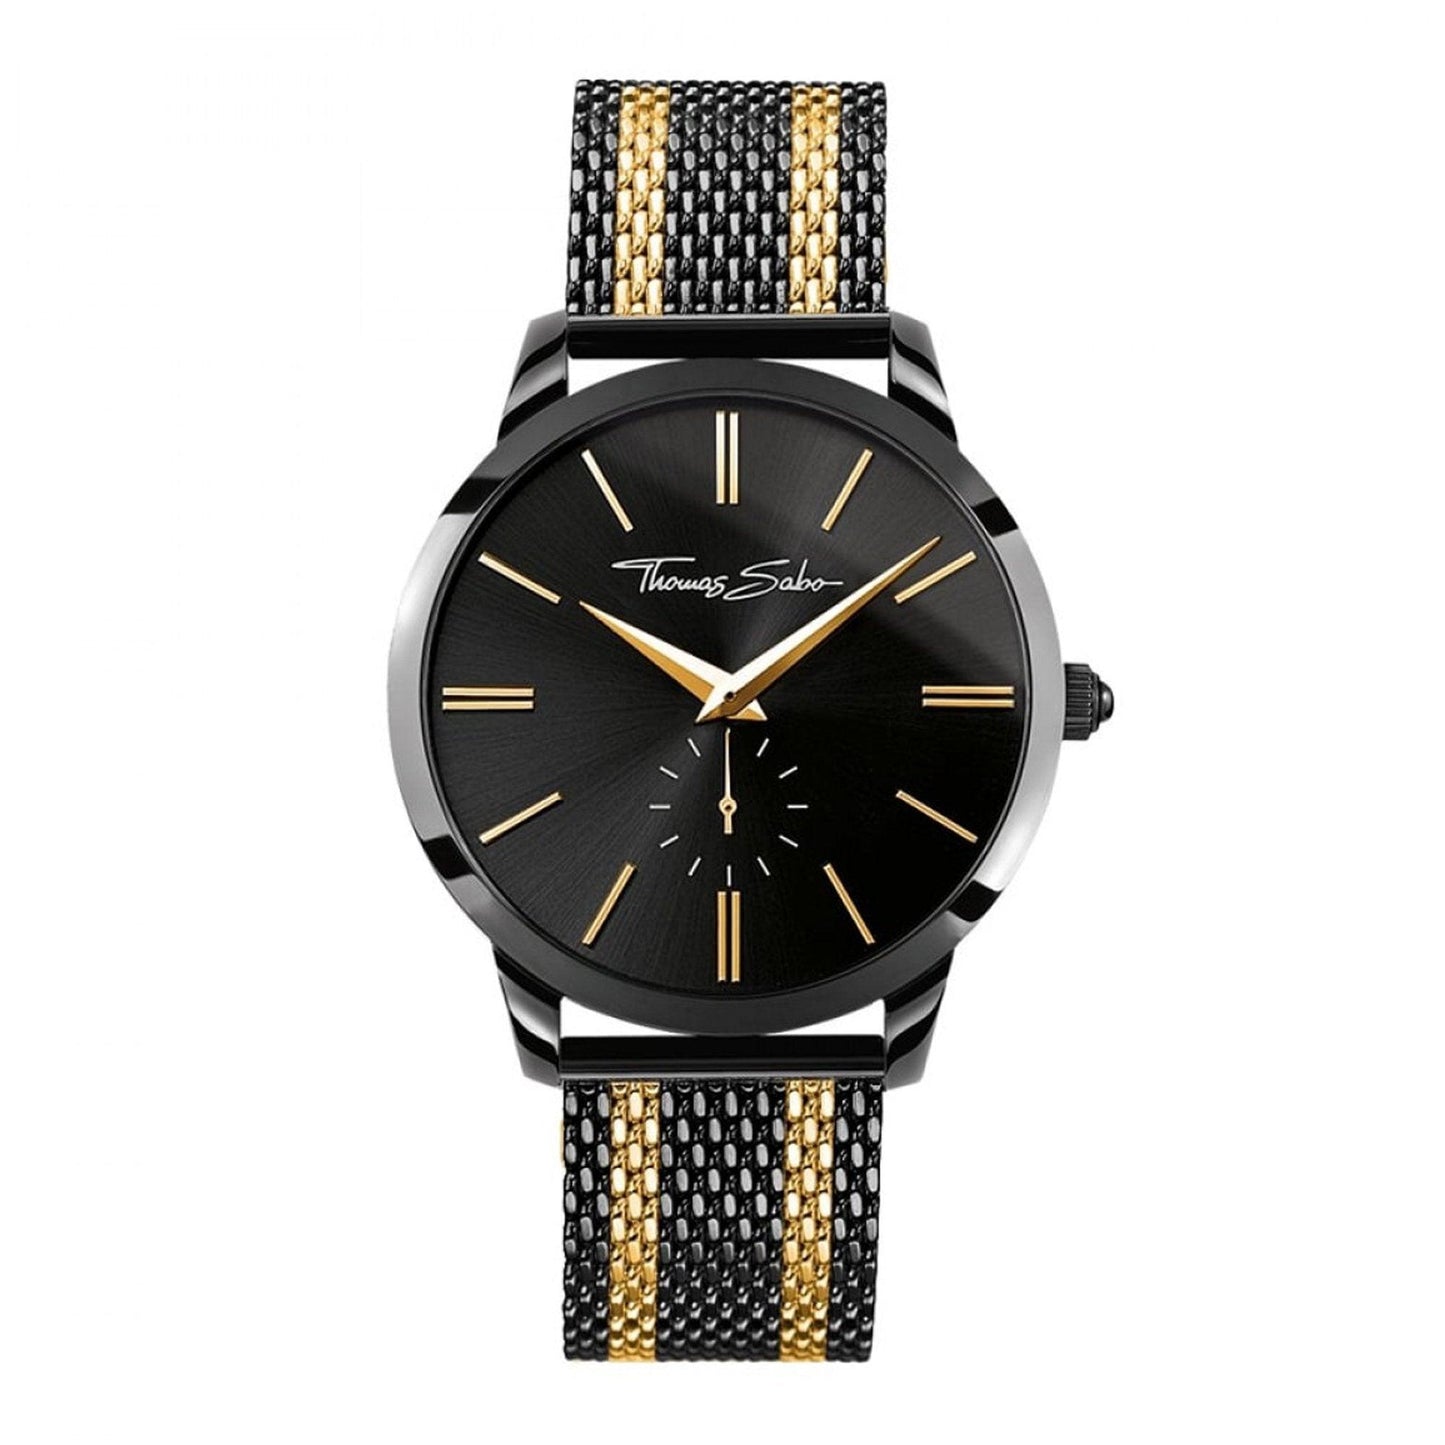 Thomas Sabo REBEL SPIRIT WA0281 orologio uomo al quarzo - Kechiq Concept Boutique